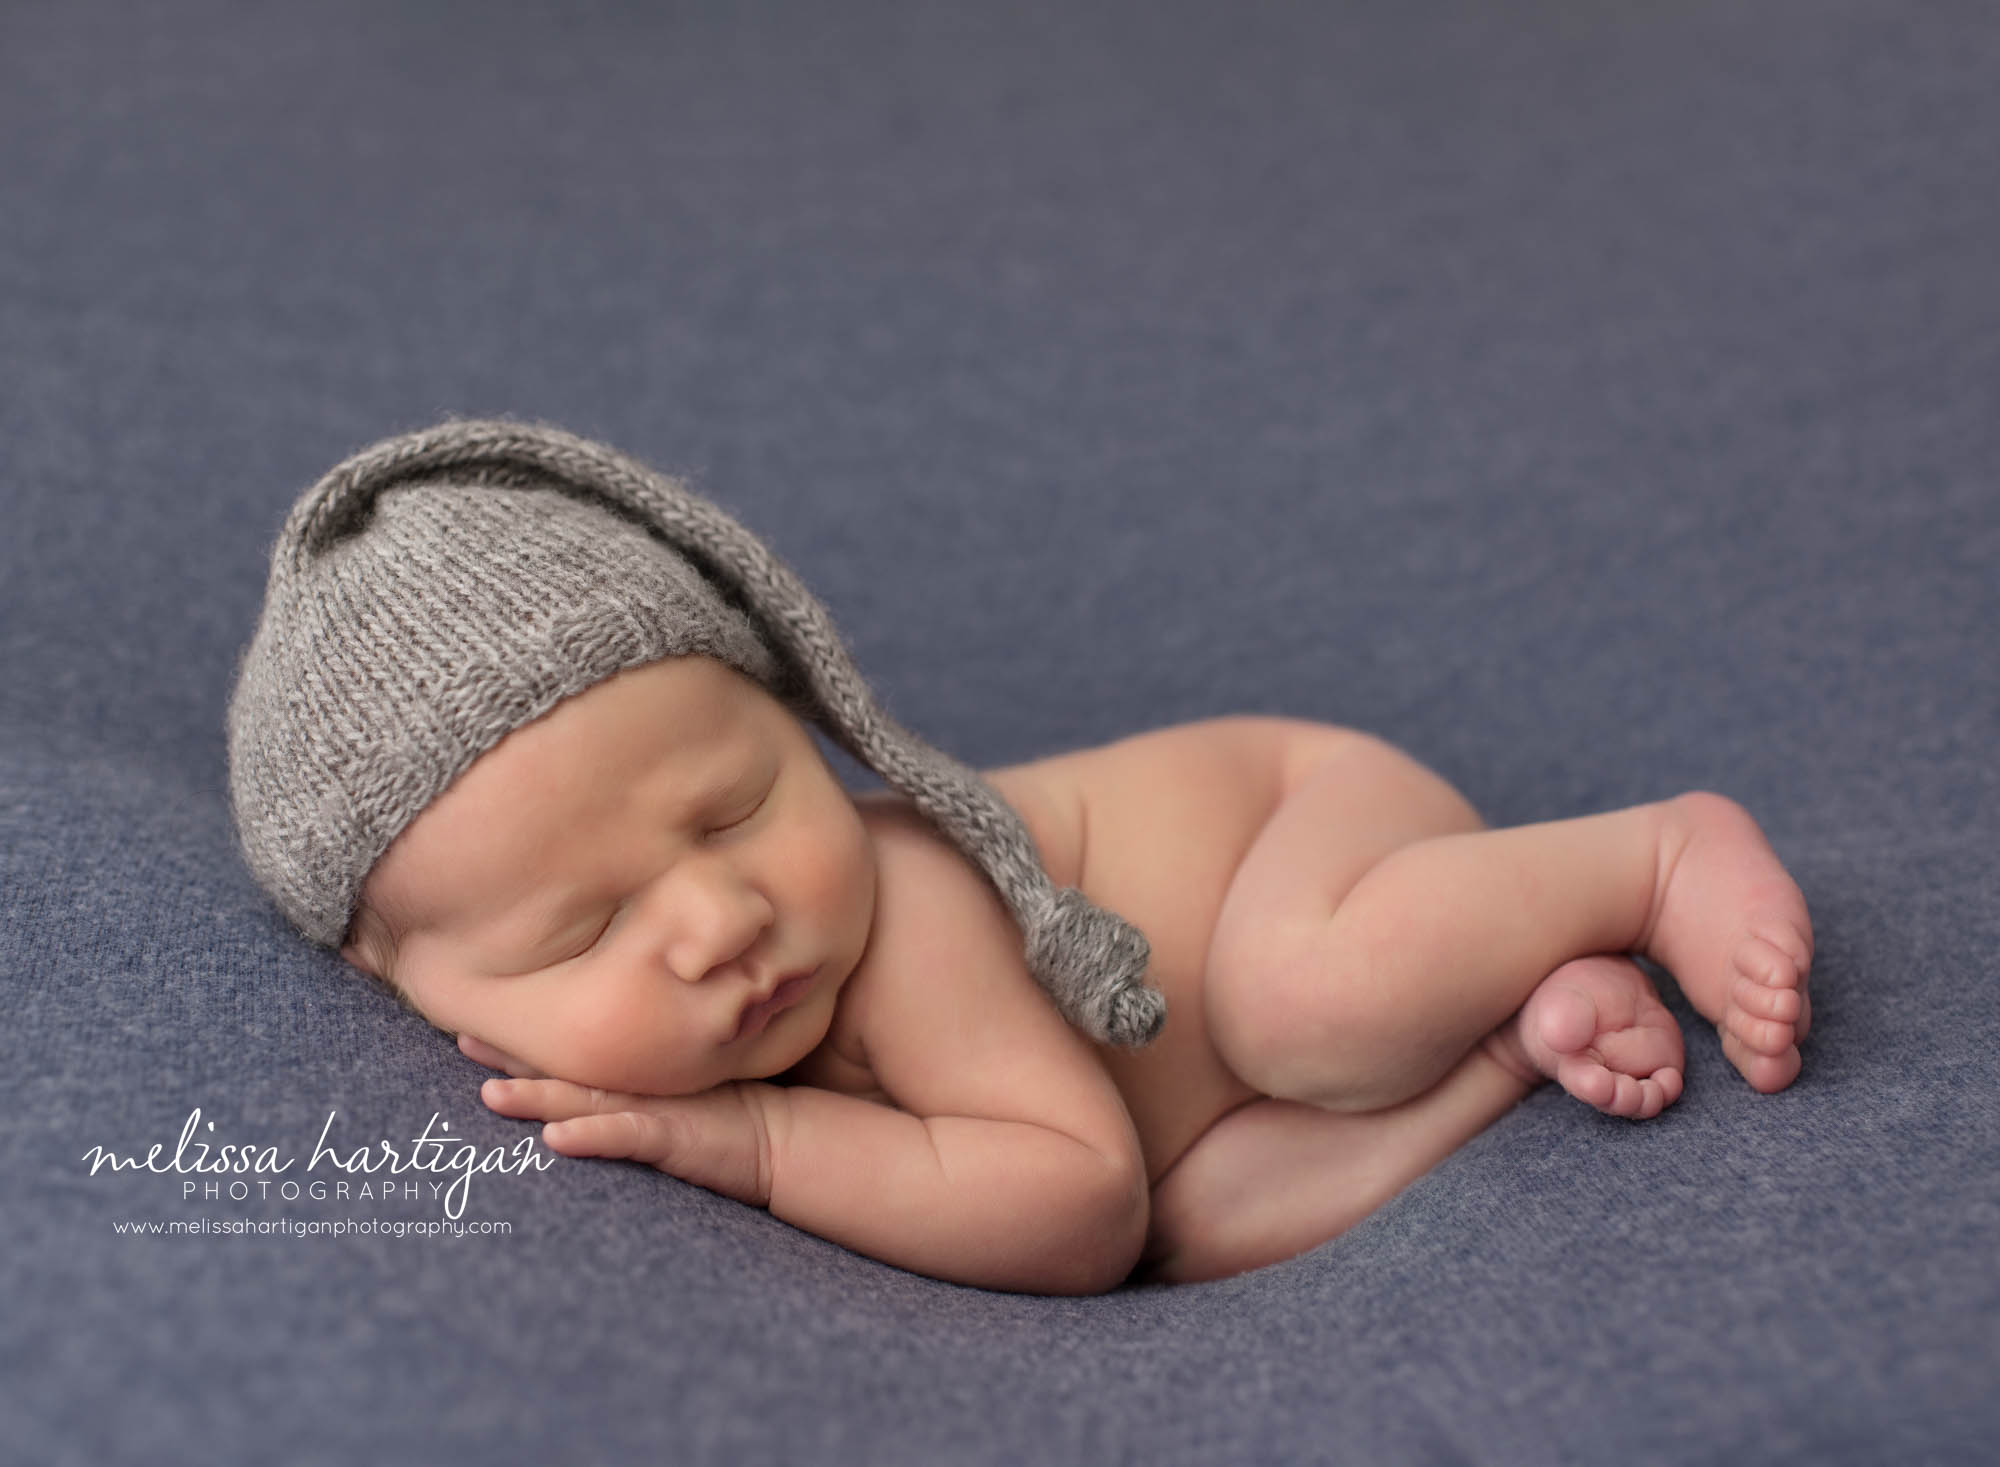 Newborn baby boy posed on side with gray sleepy cap